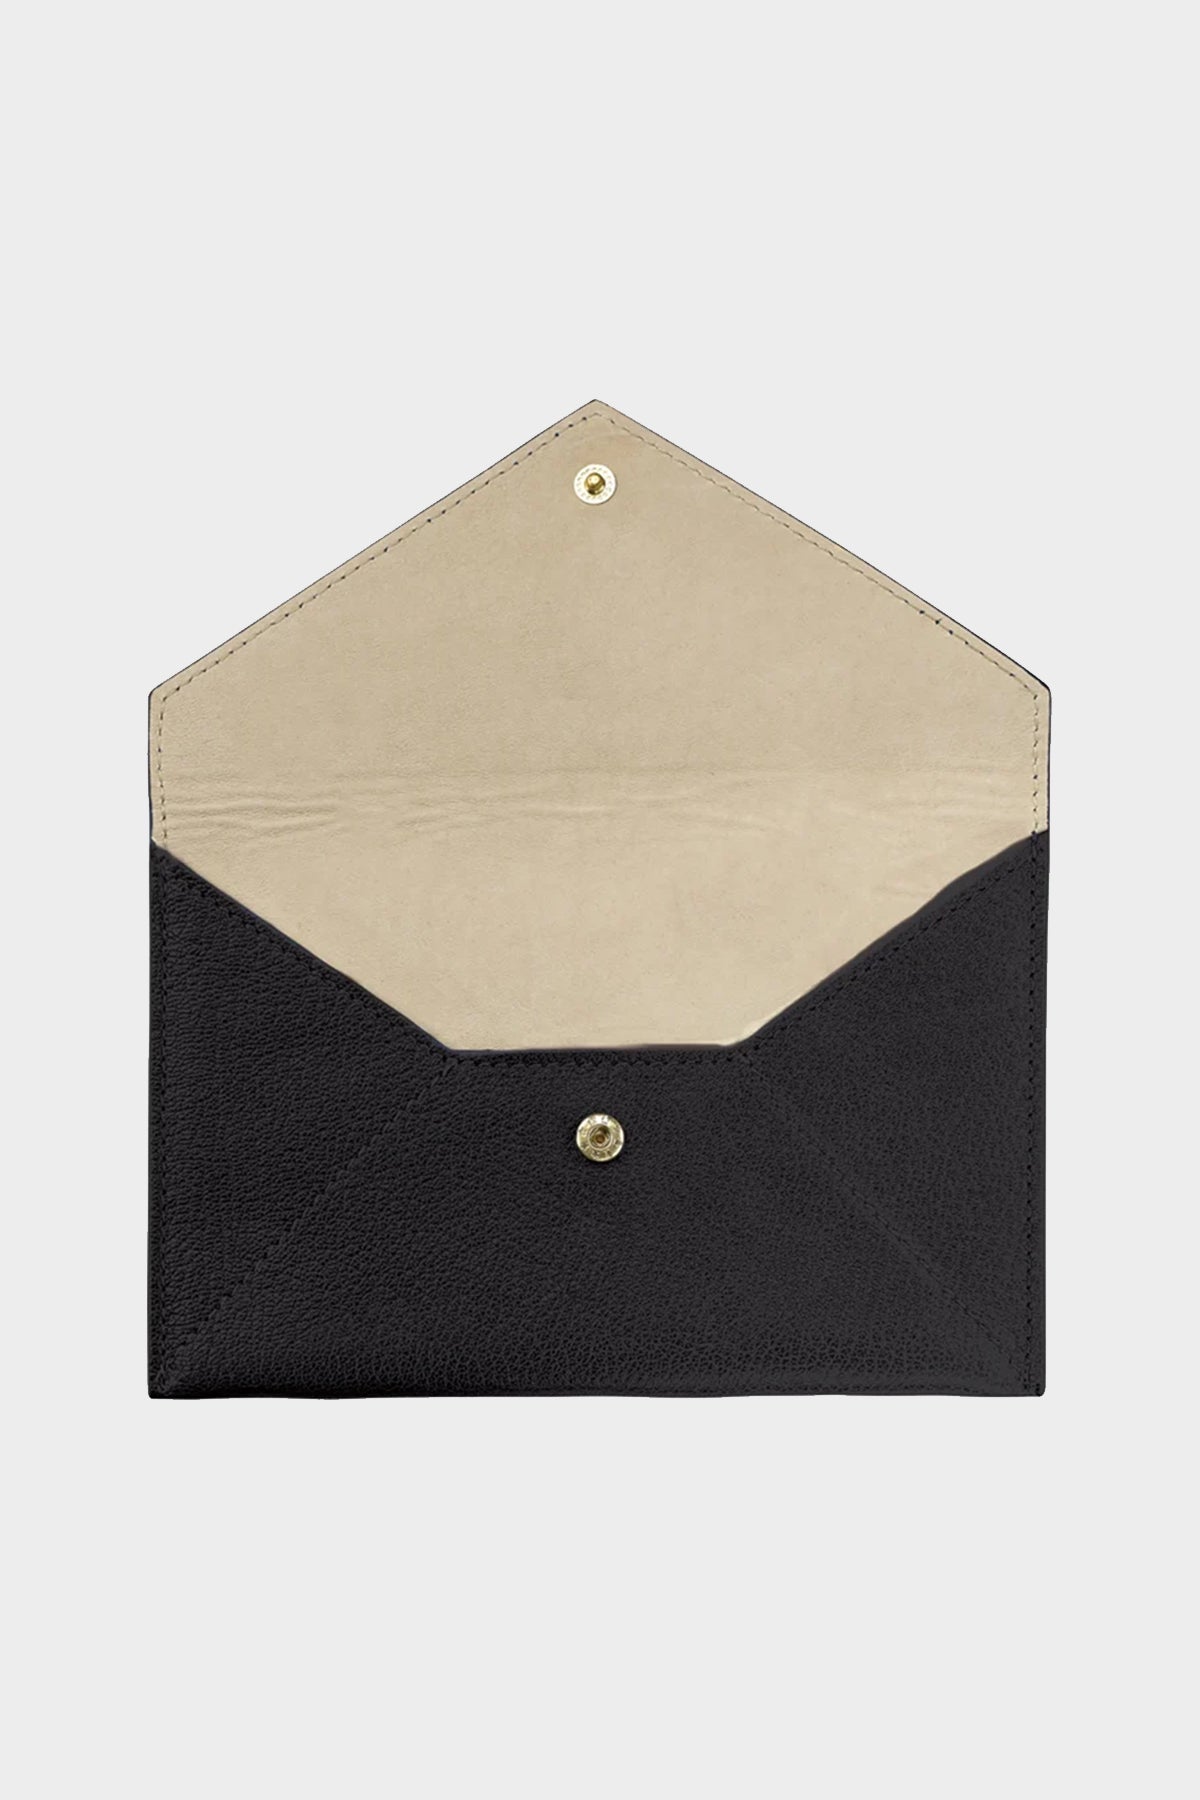 Black Goatskin Leather Medium Envelope - shop-olivia.com